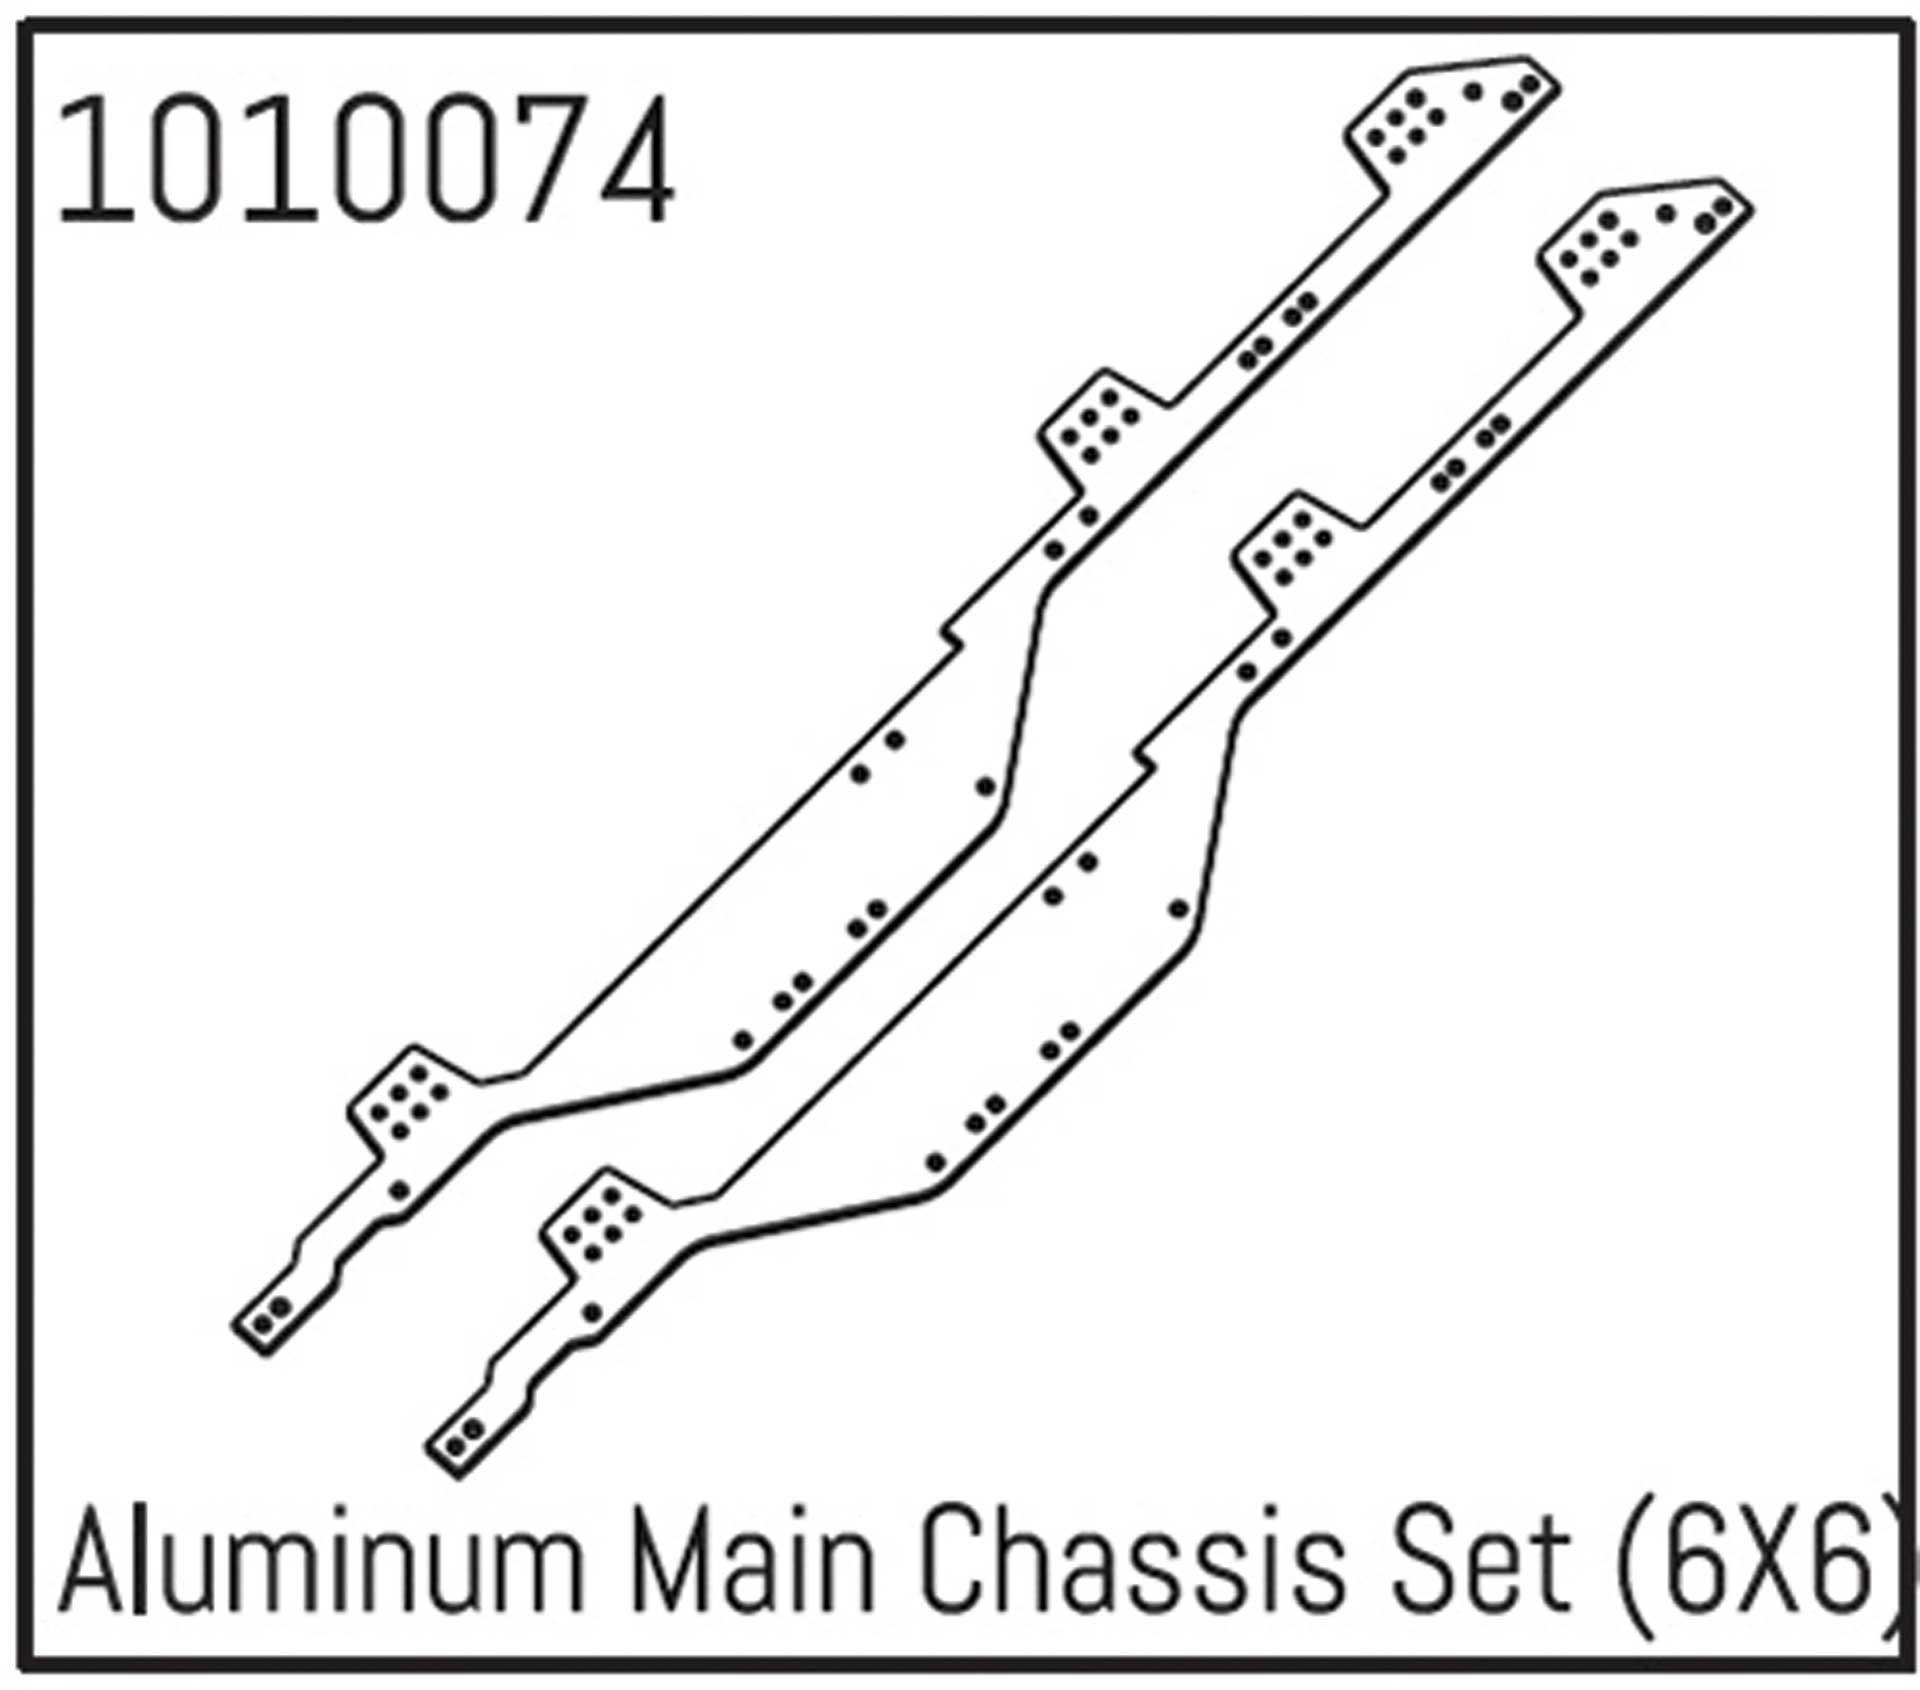 ABSIMA Aluminum main chassis kit (6X6)